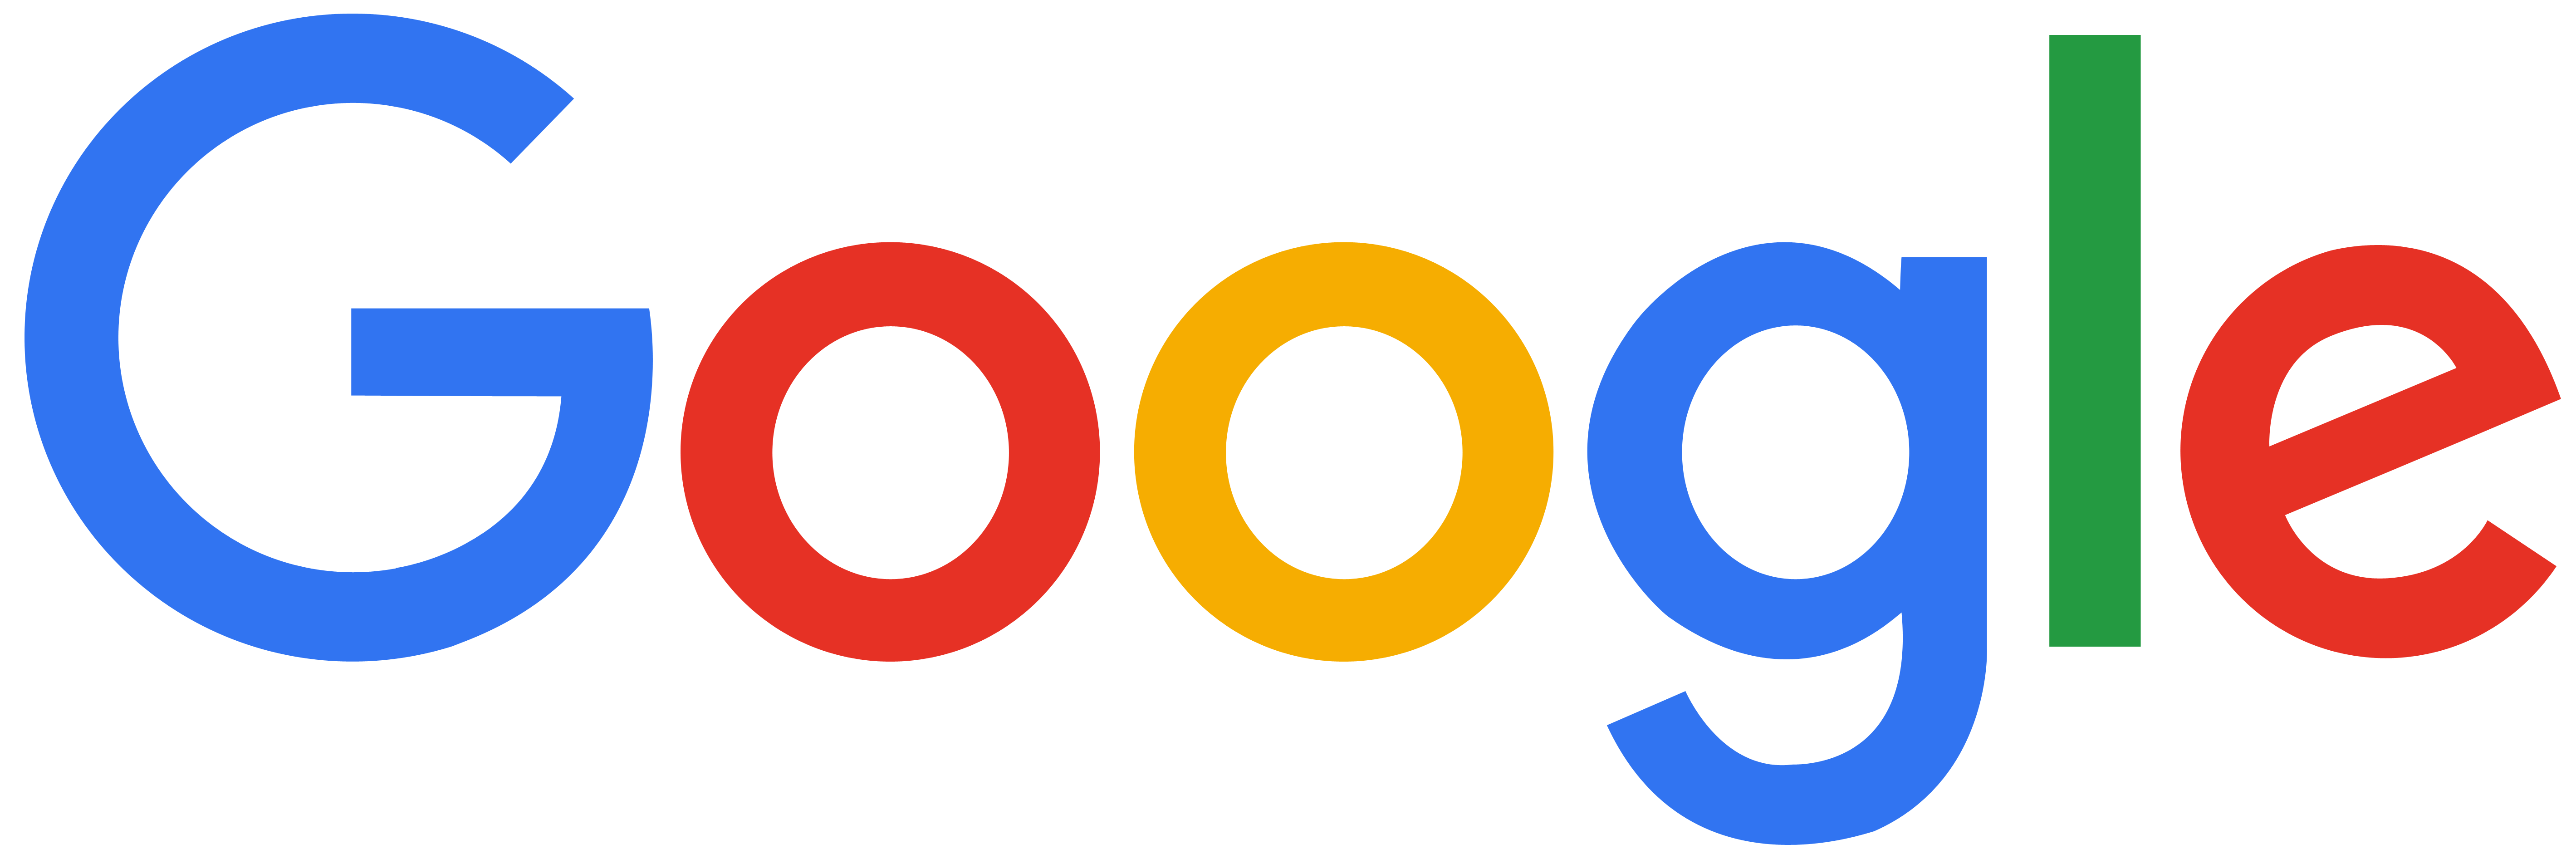 google logo png hd #2595